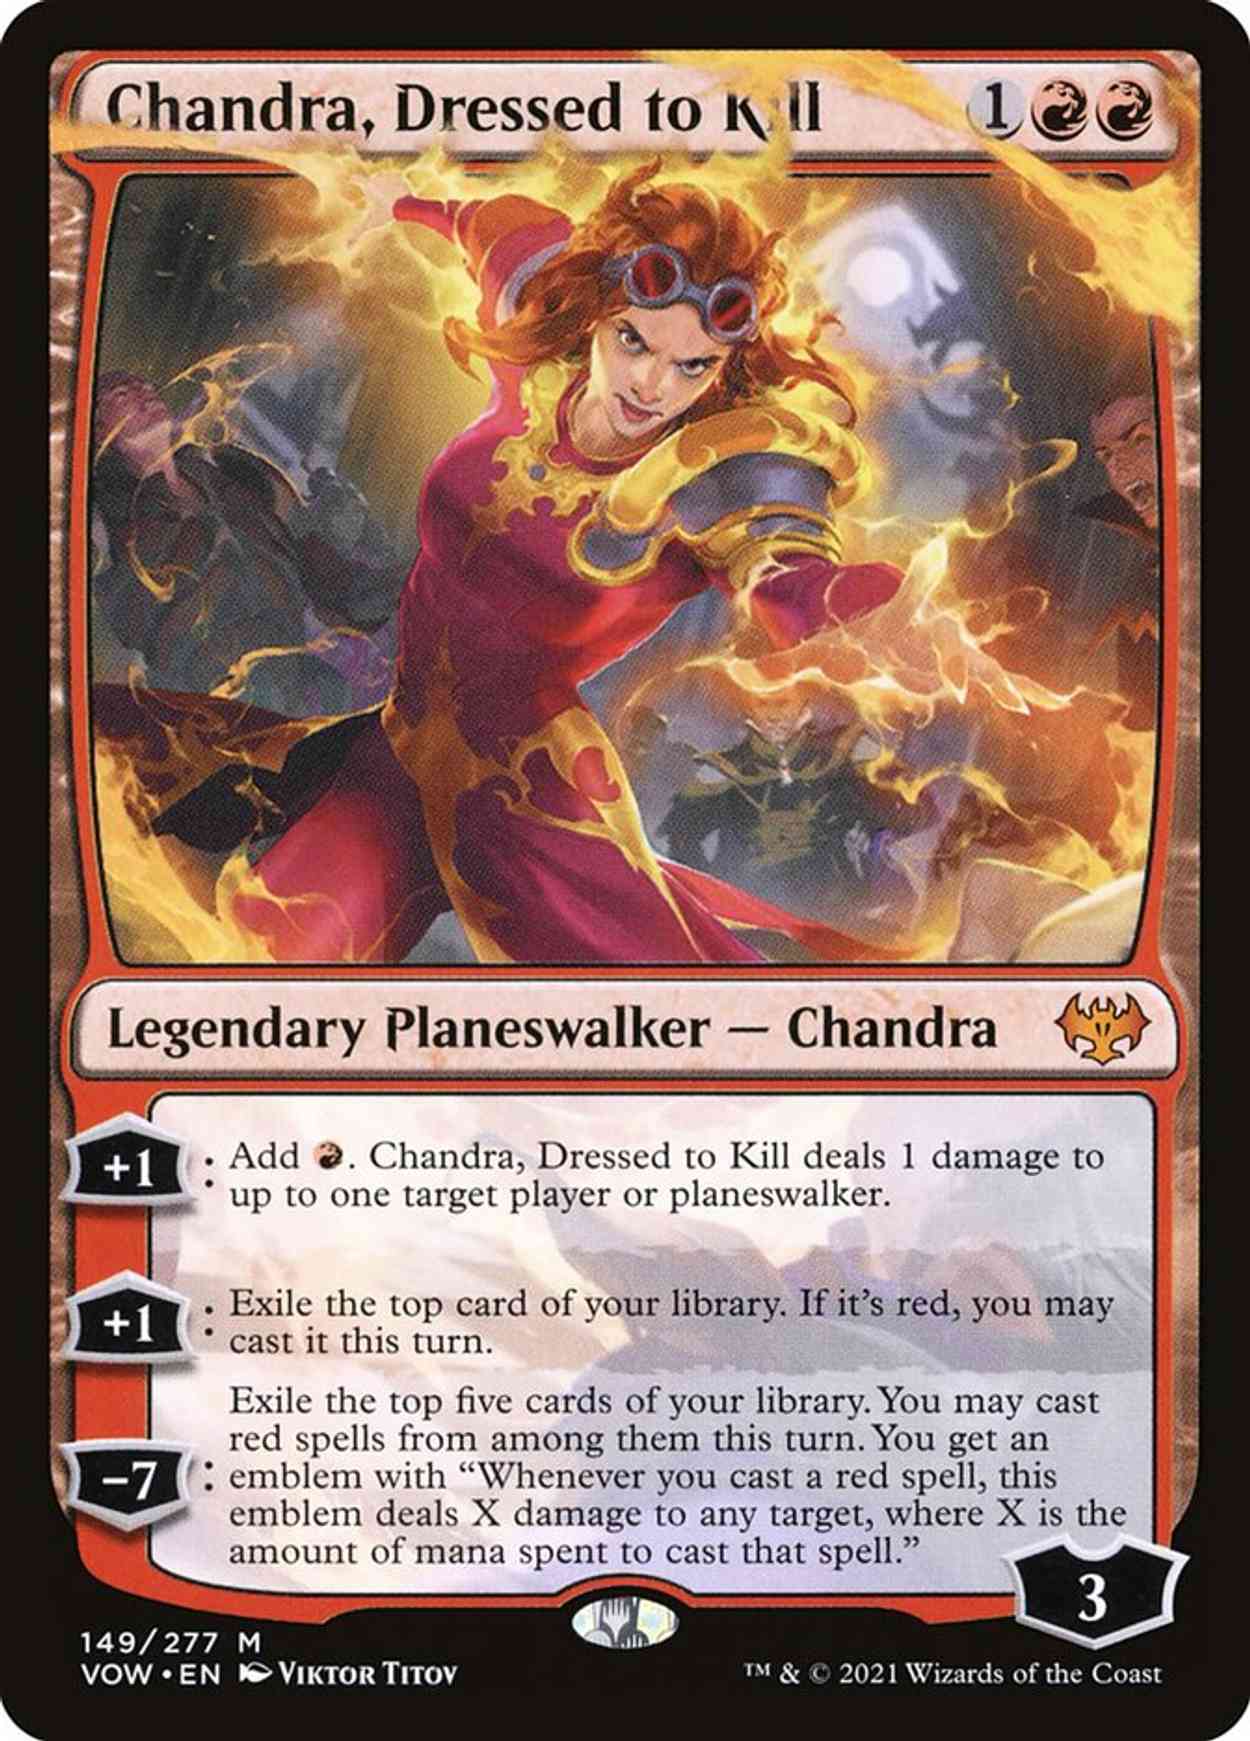 Chandra, Dressed to Kill magic card front